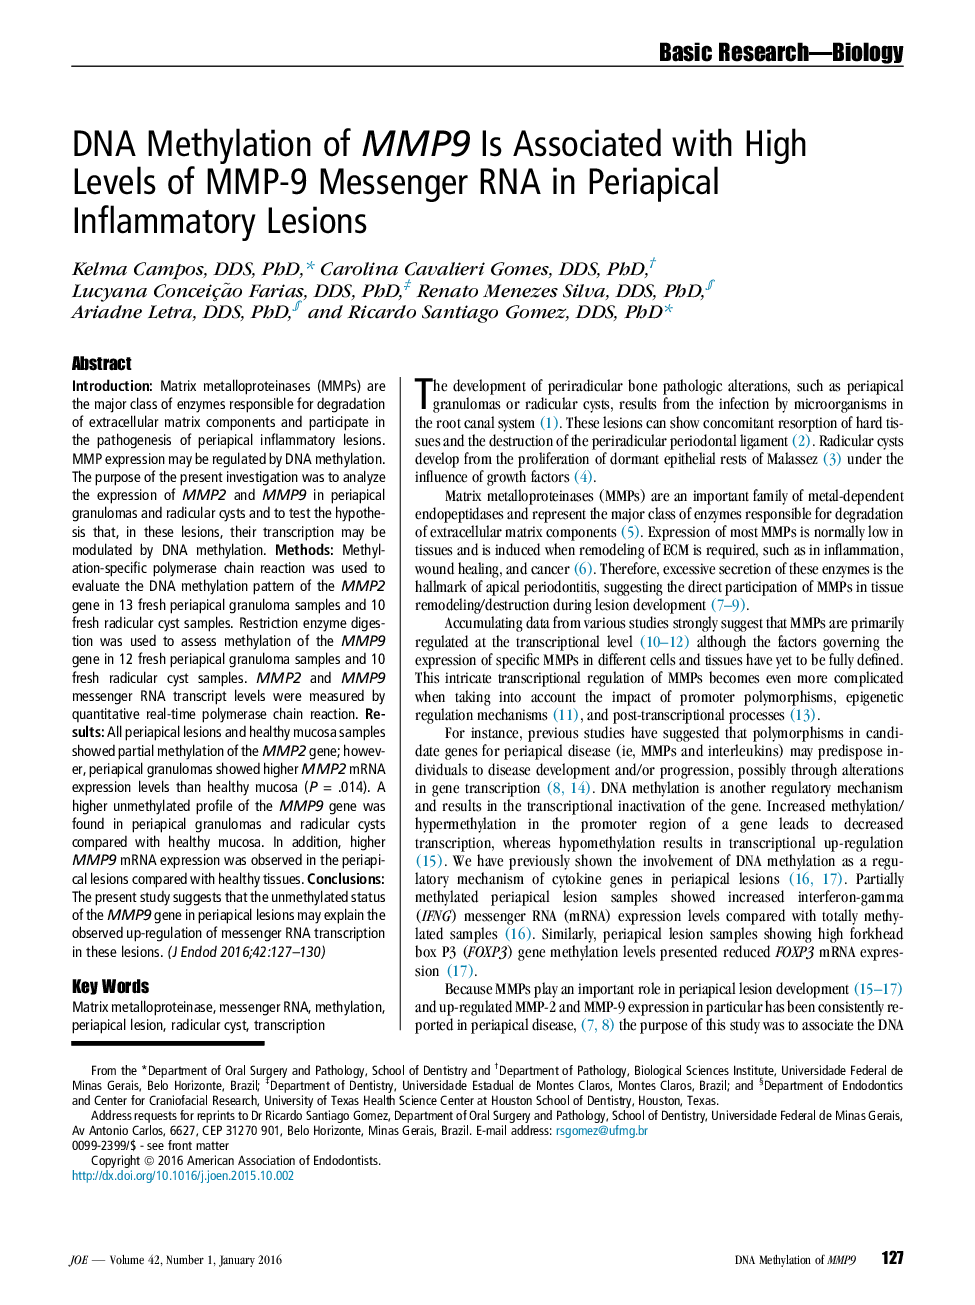 DNA متیلاسیون MMP9 با سطوح بالایی از RNA پیام رسان MMP-9 در ضایعات التهابی پری اپیکال مرتبط است